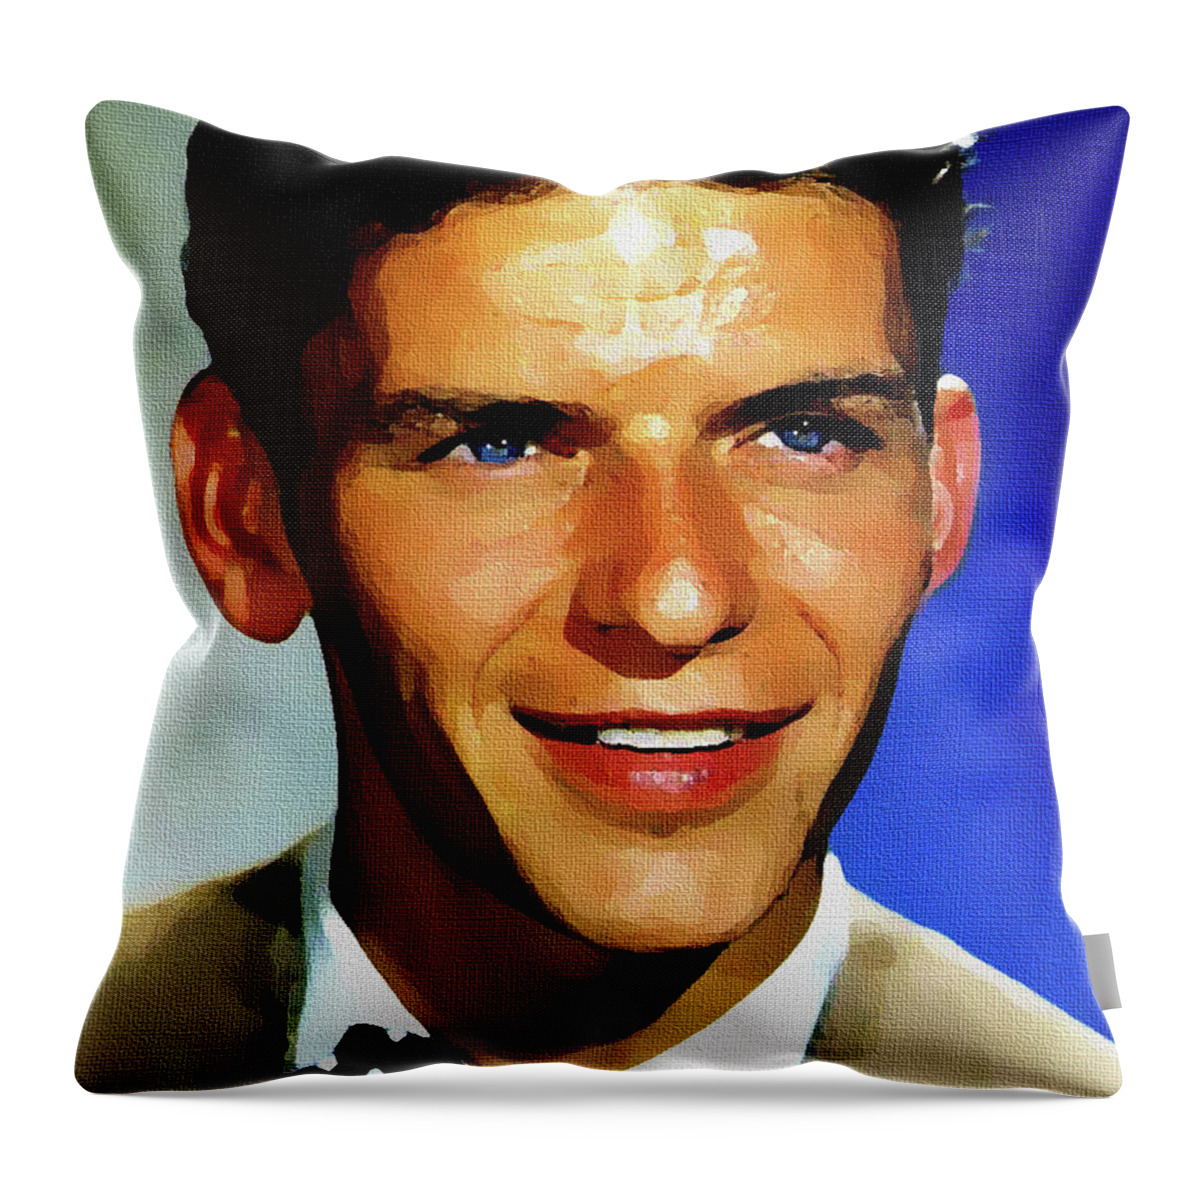 Frank Throw Pillow featuring the digital art Frank Sinatra 2 by Stars on Art